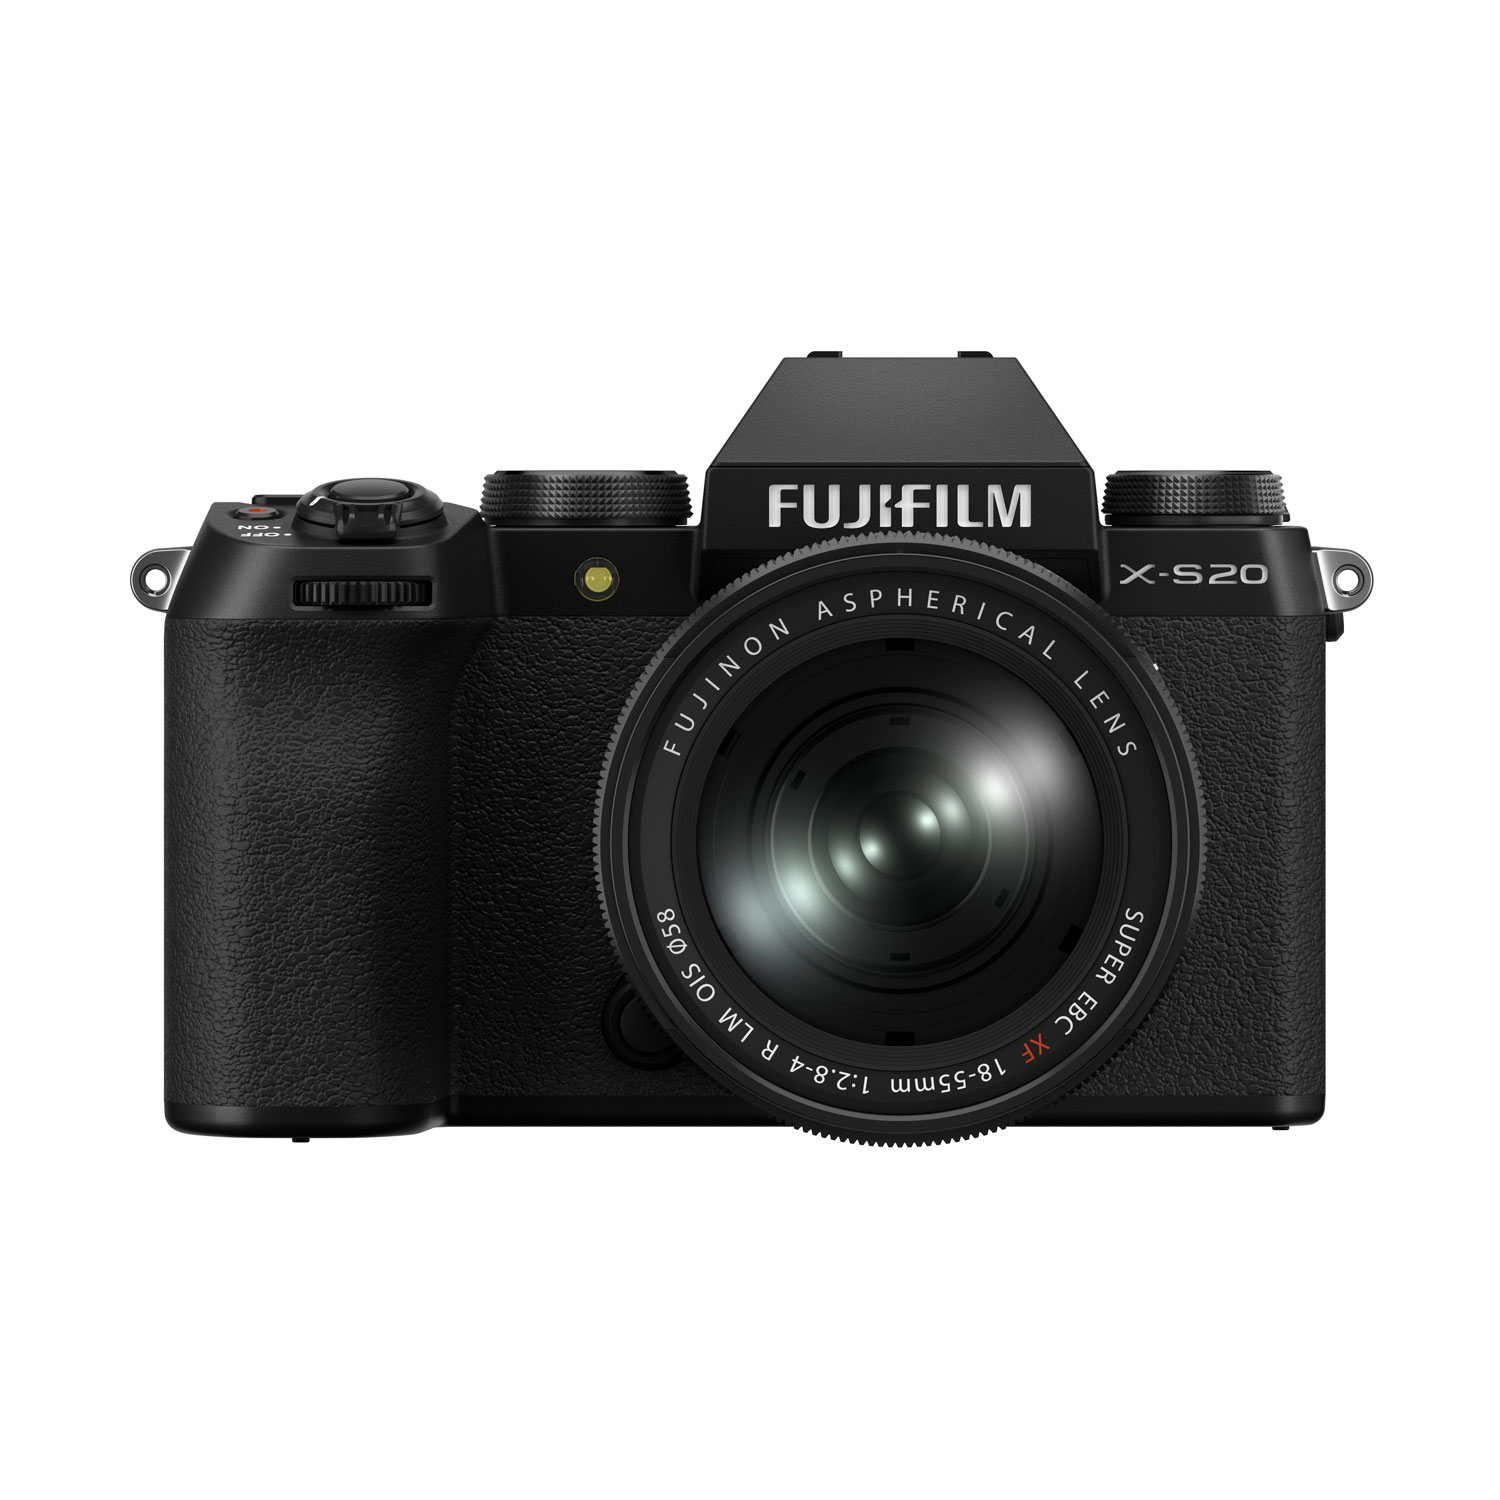 Fujifilm X-S20 Mirrorless Camera with 18-55mm Lens Kit